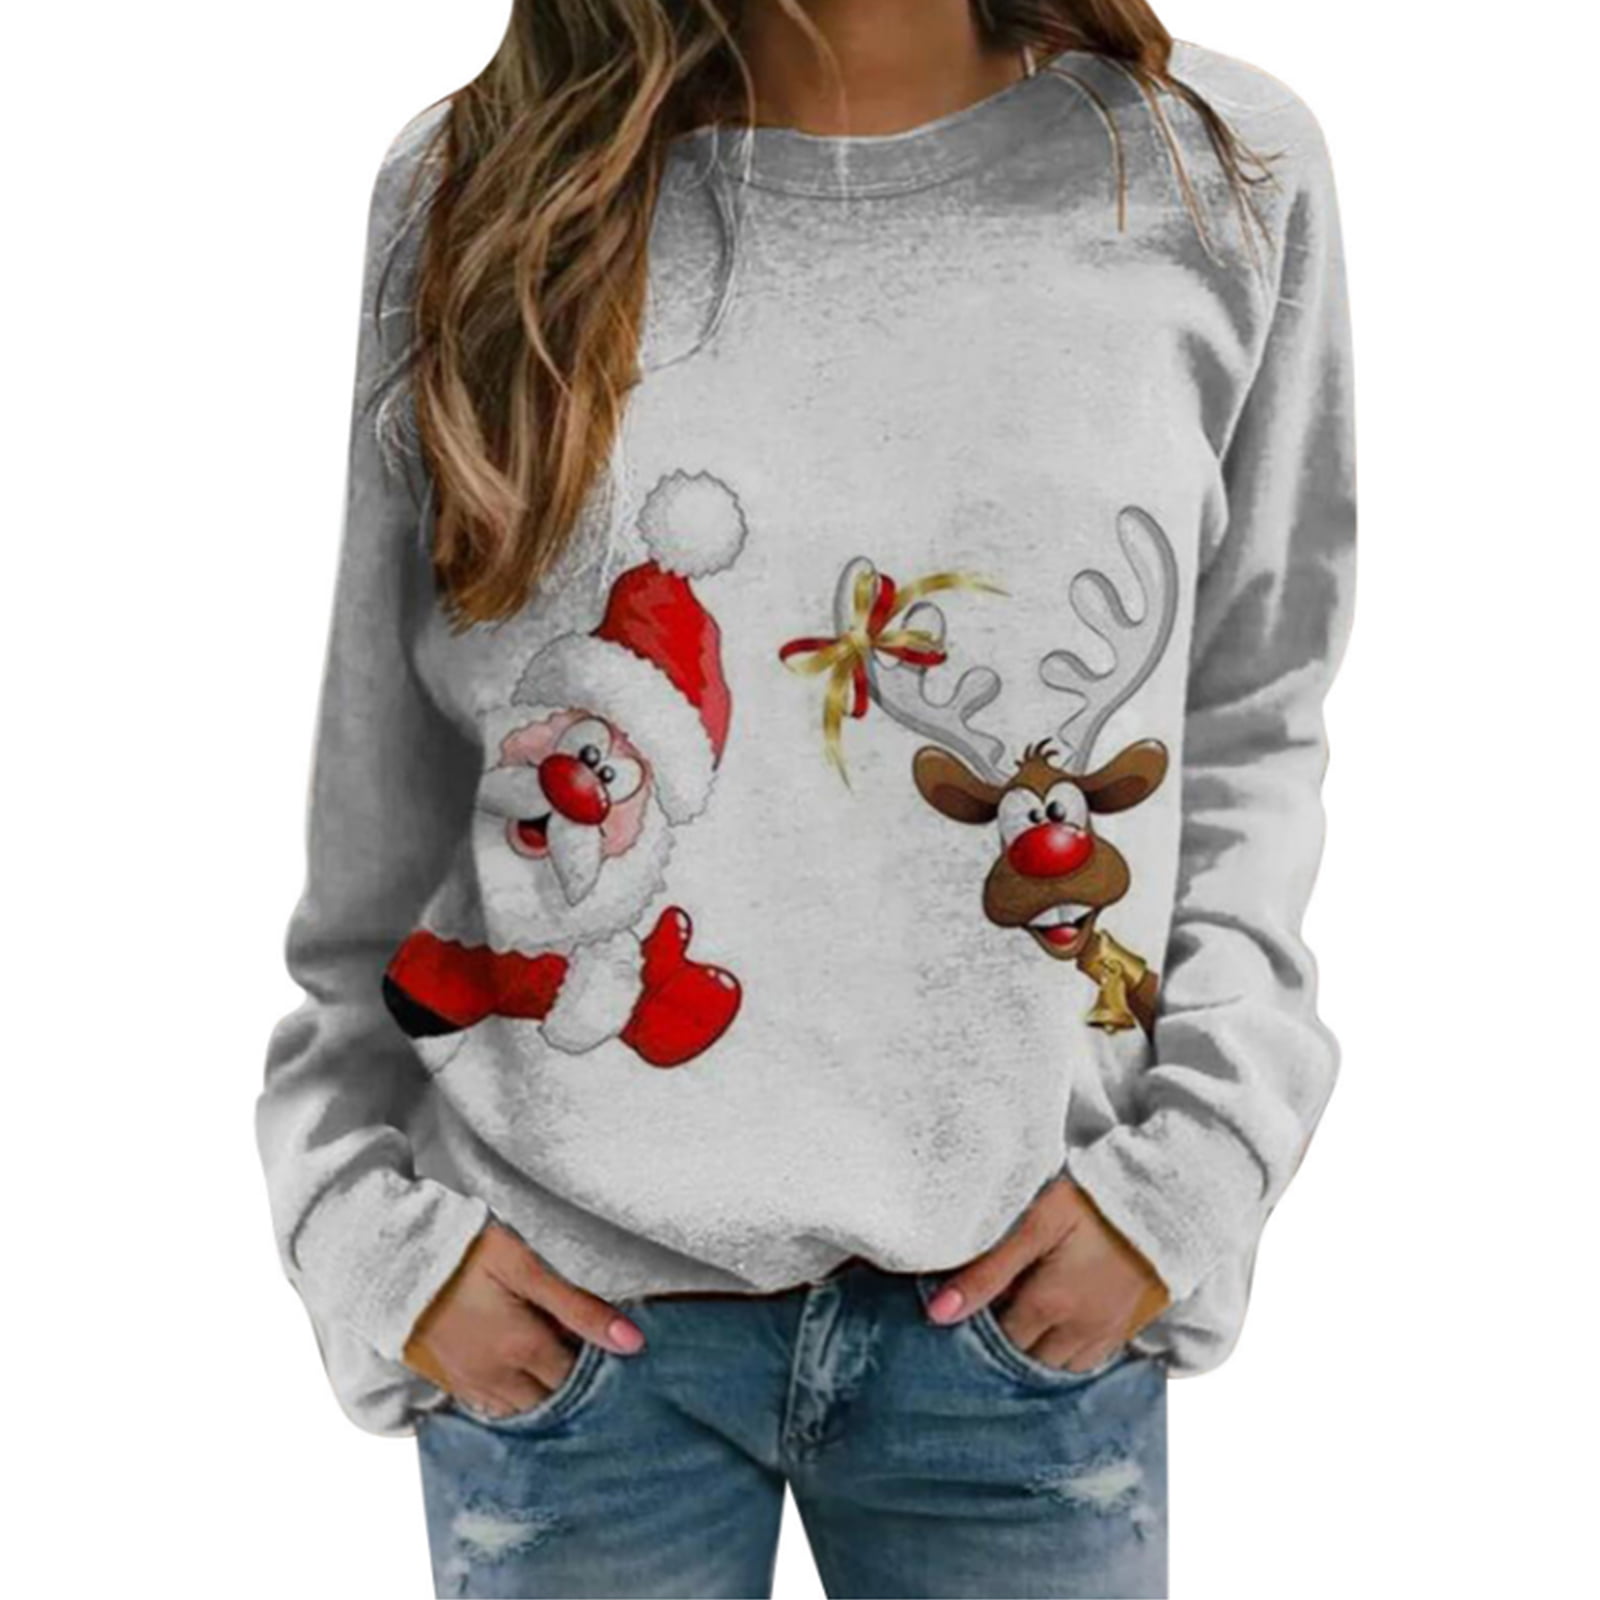 Women?s Christmas Pullovers, Cute Holiday Cartoon Print Long Sleeve ...